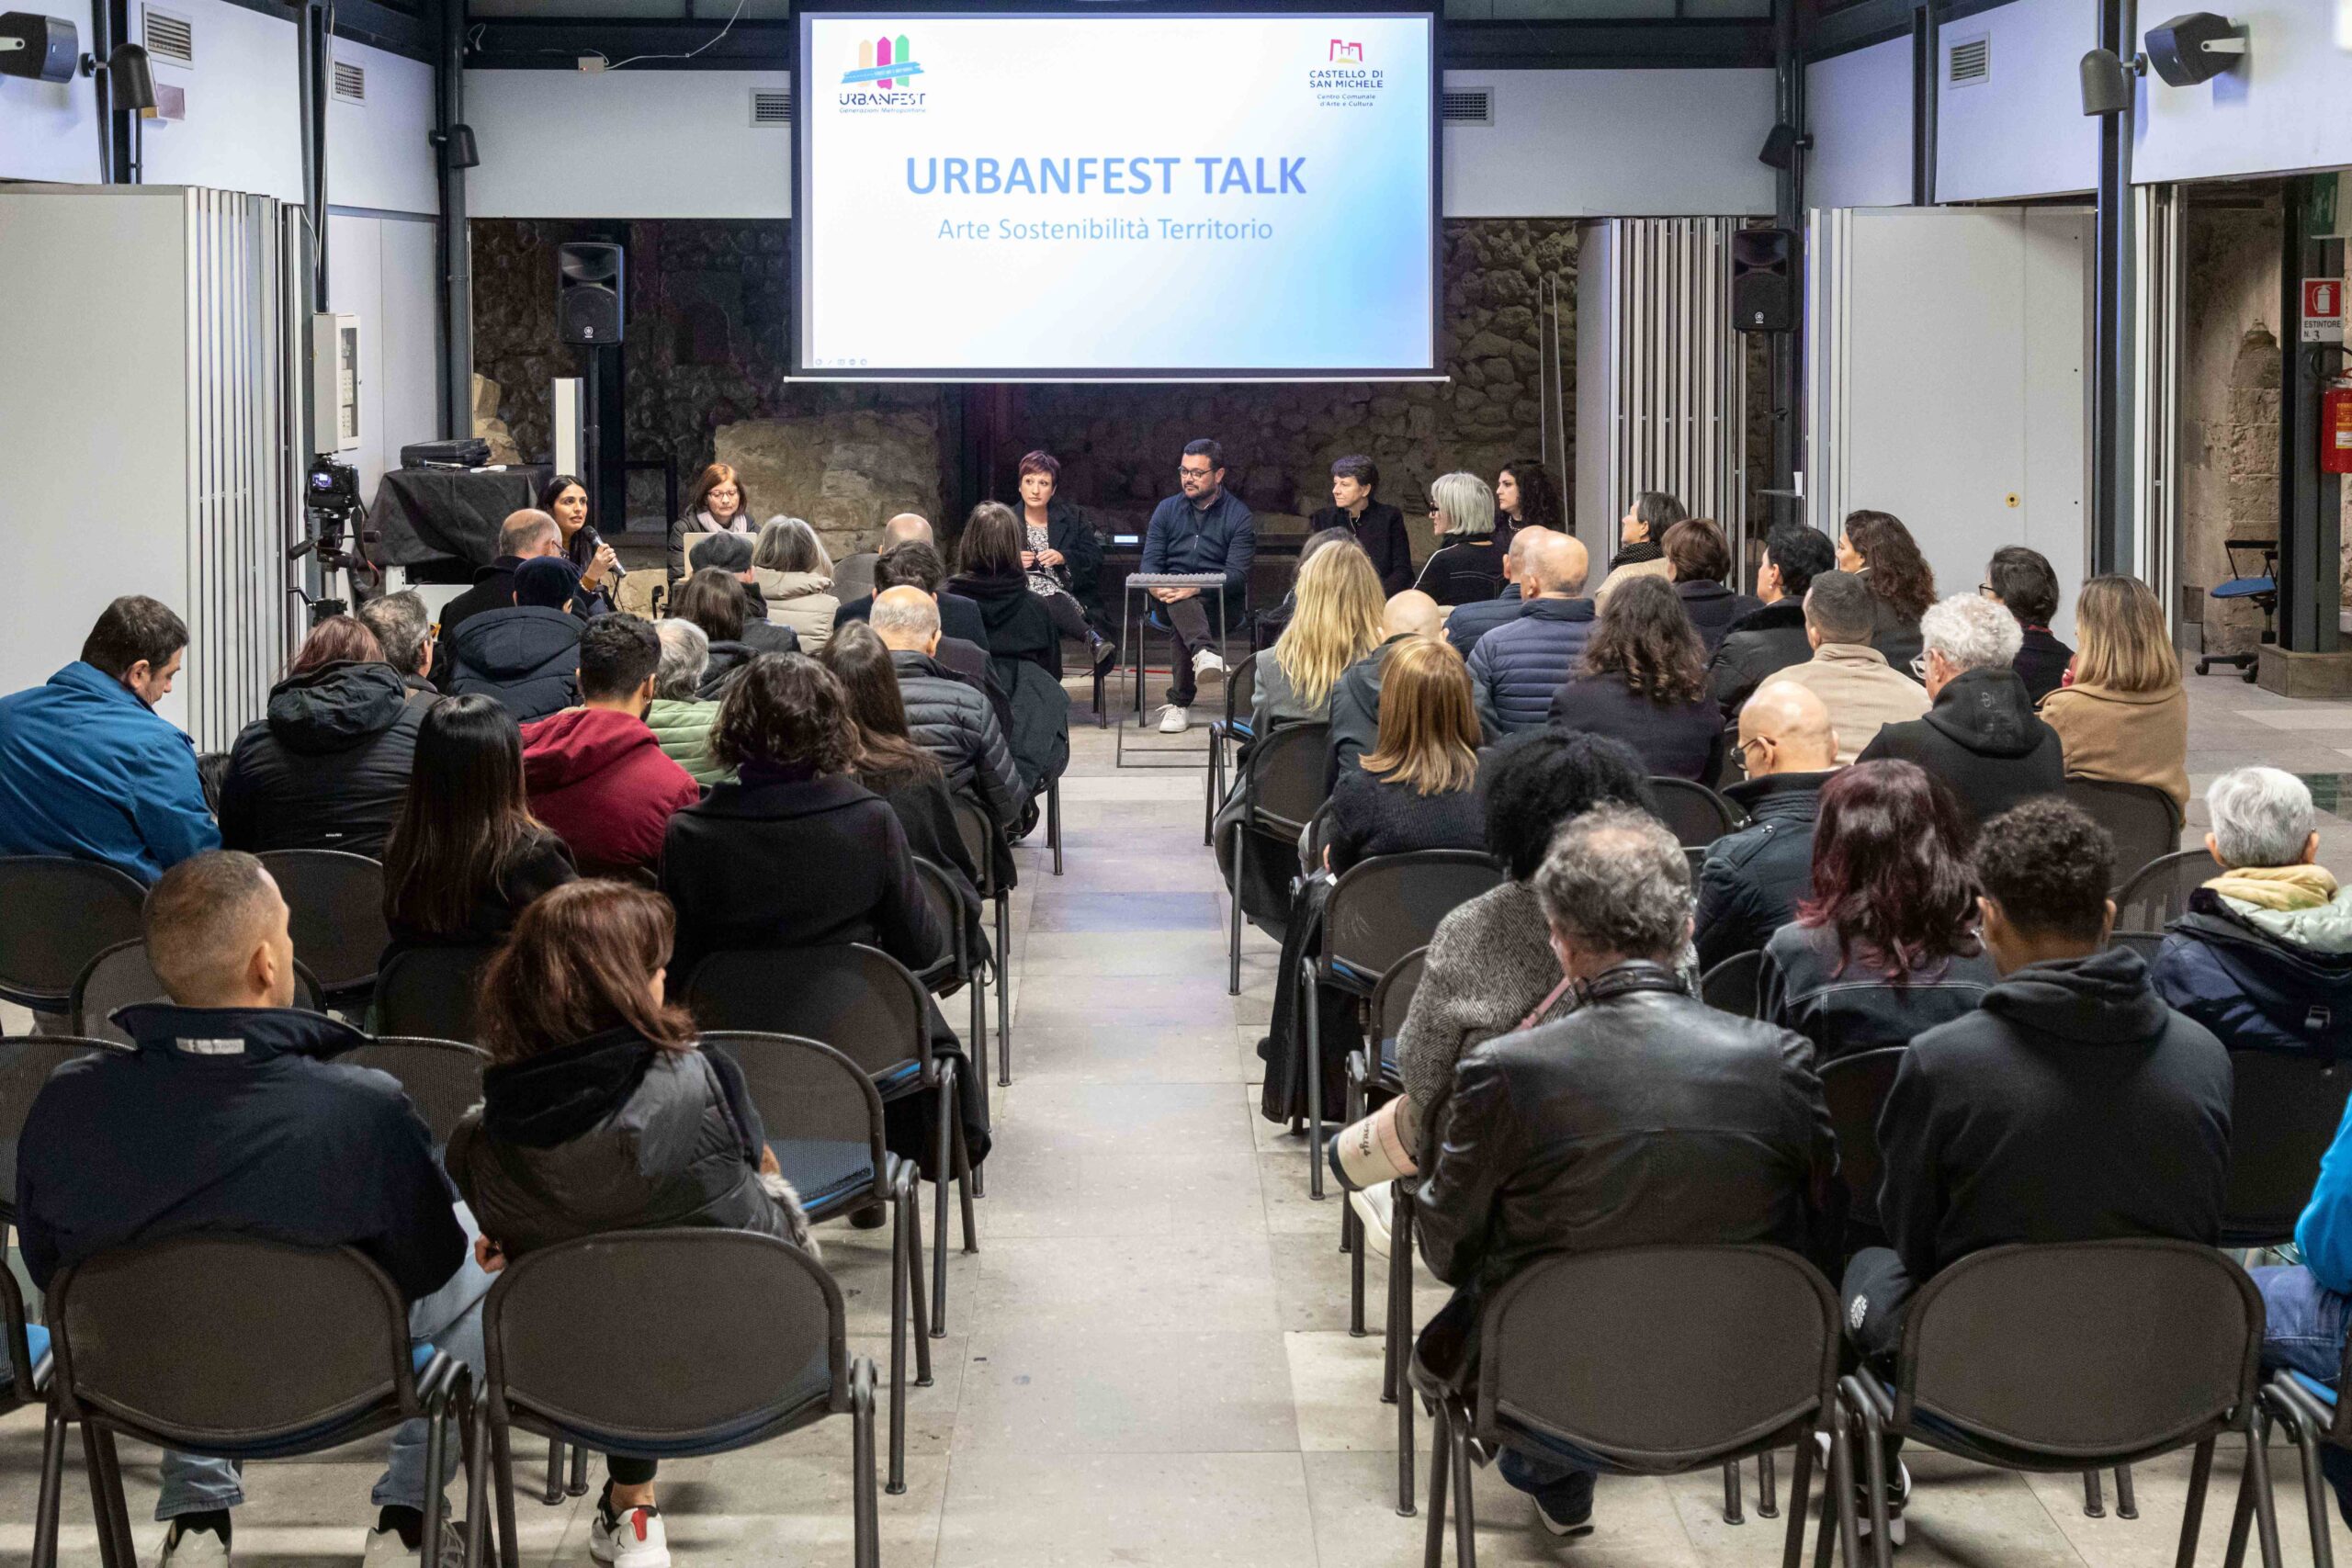 Urbanfest talk at Castello di San Michele - Photo: Massimiliano Frau